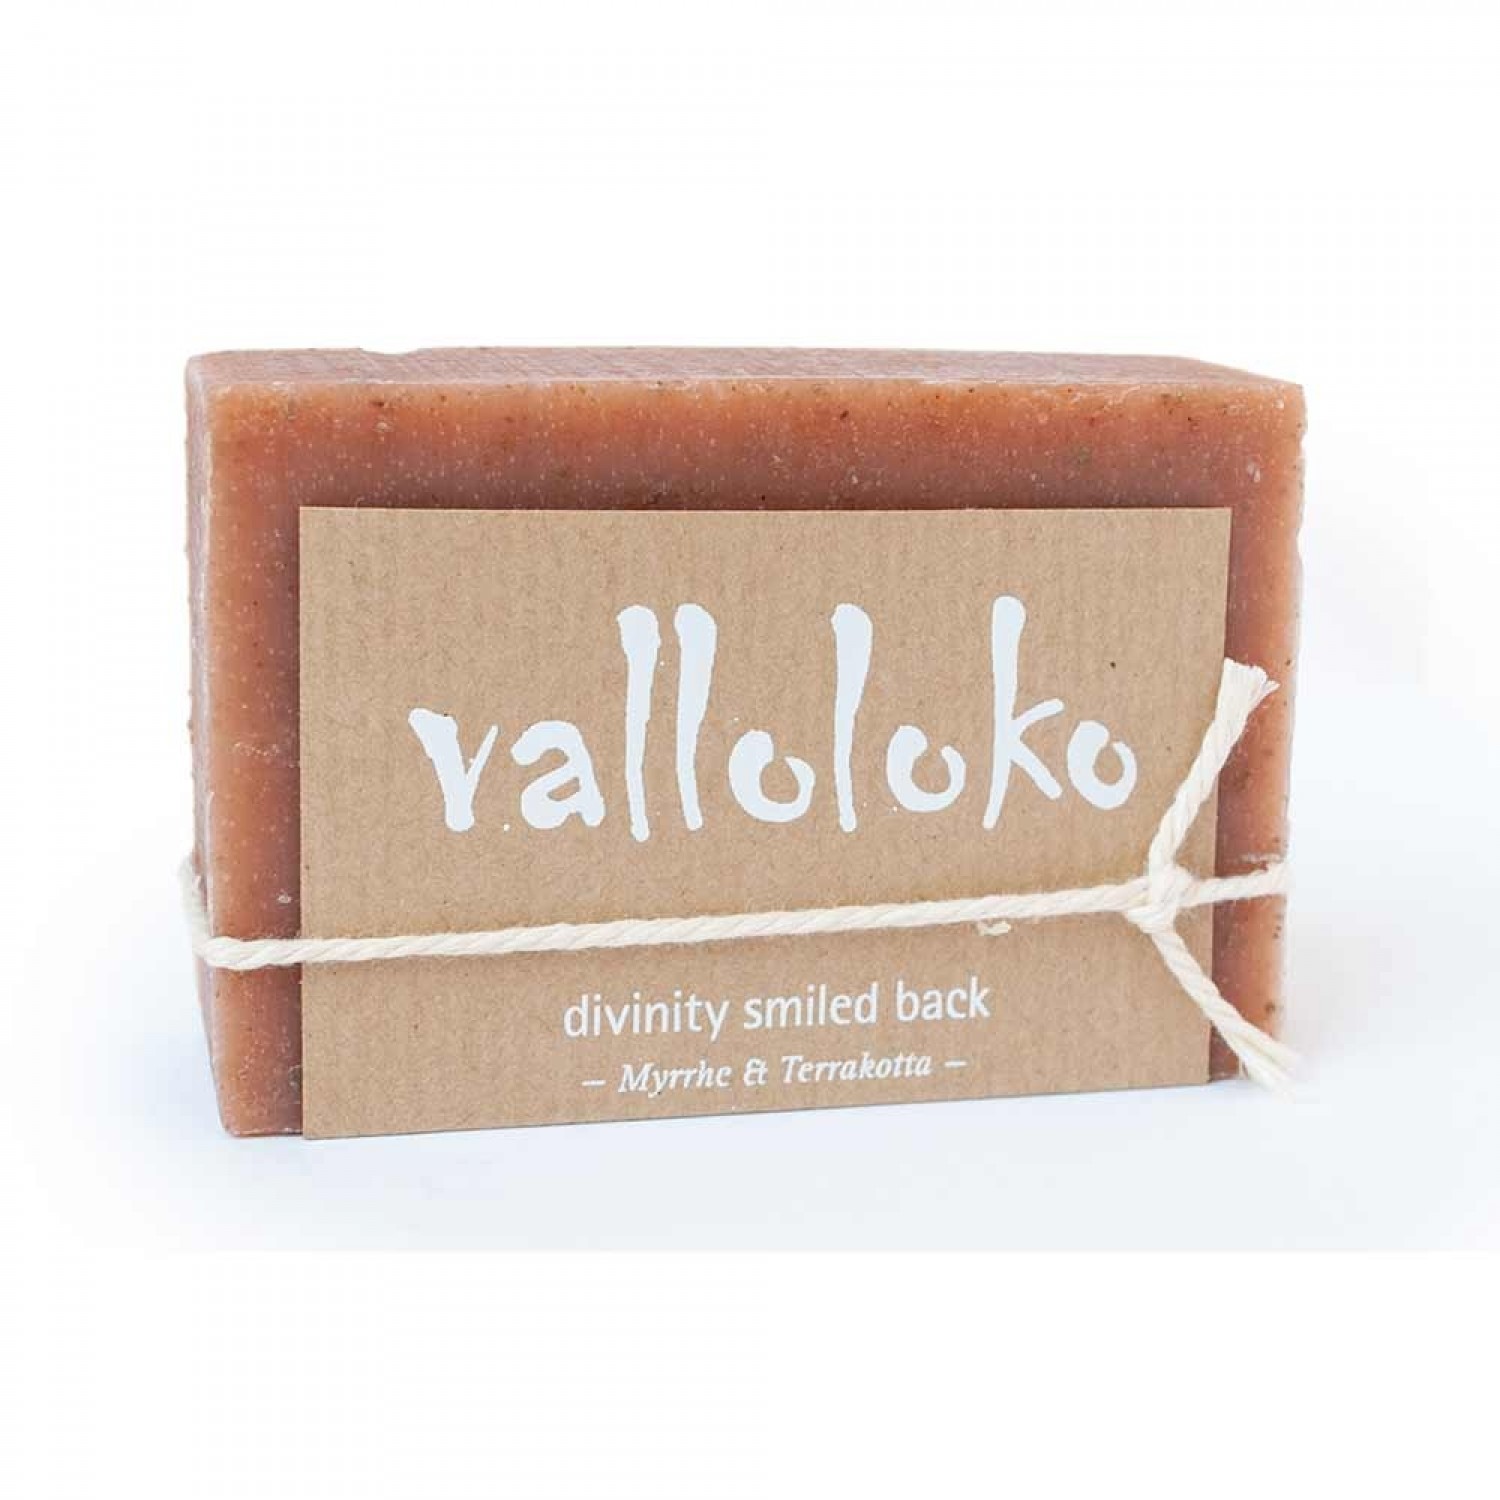 Valloloko Divinity Smiled Back hand-made Body Soap